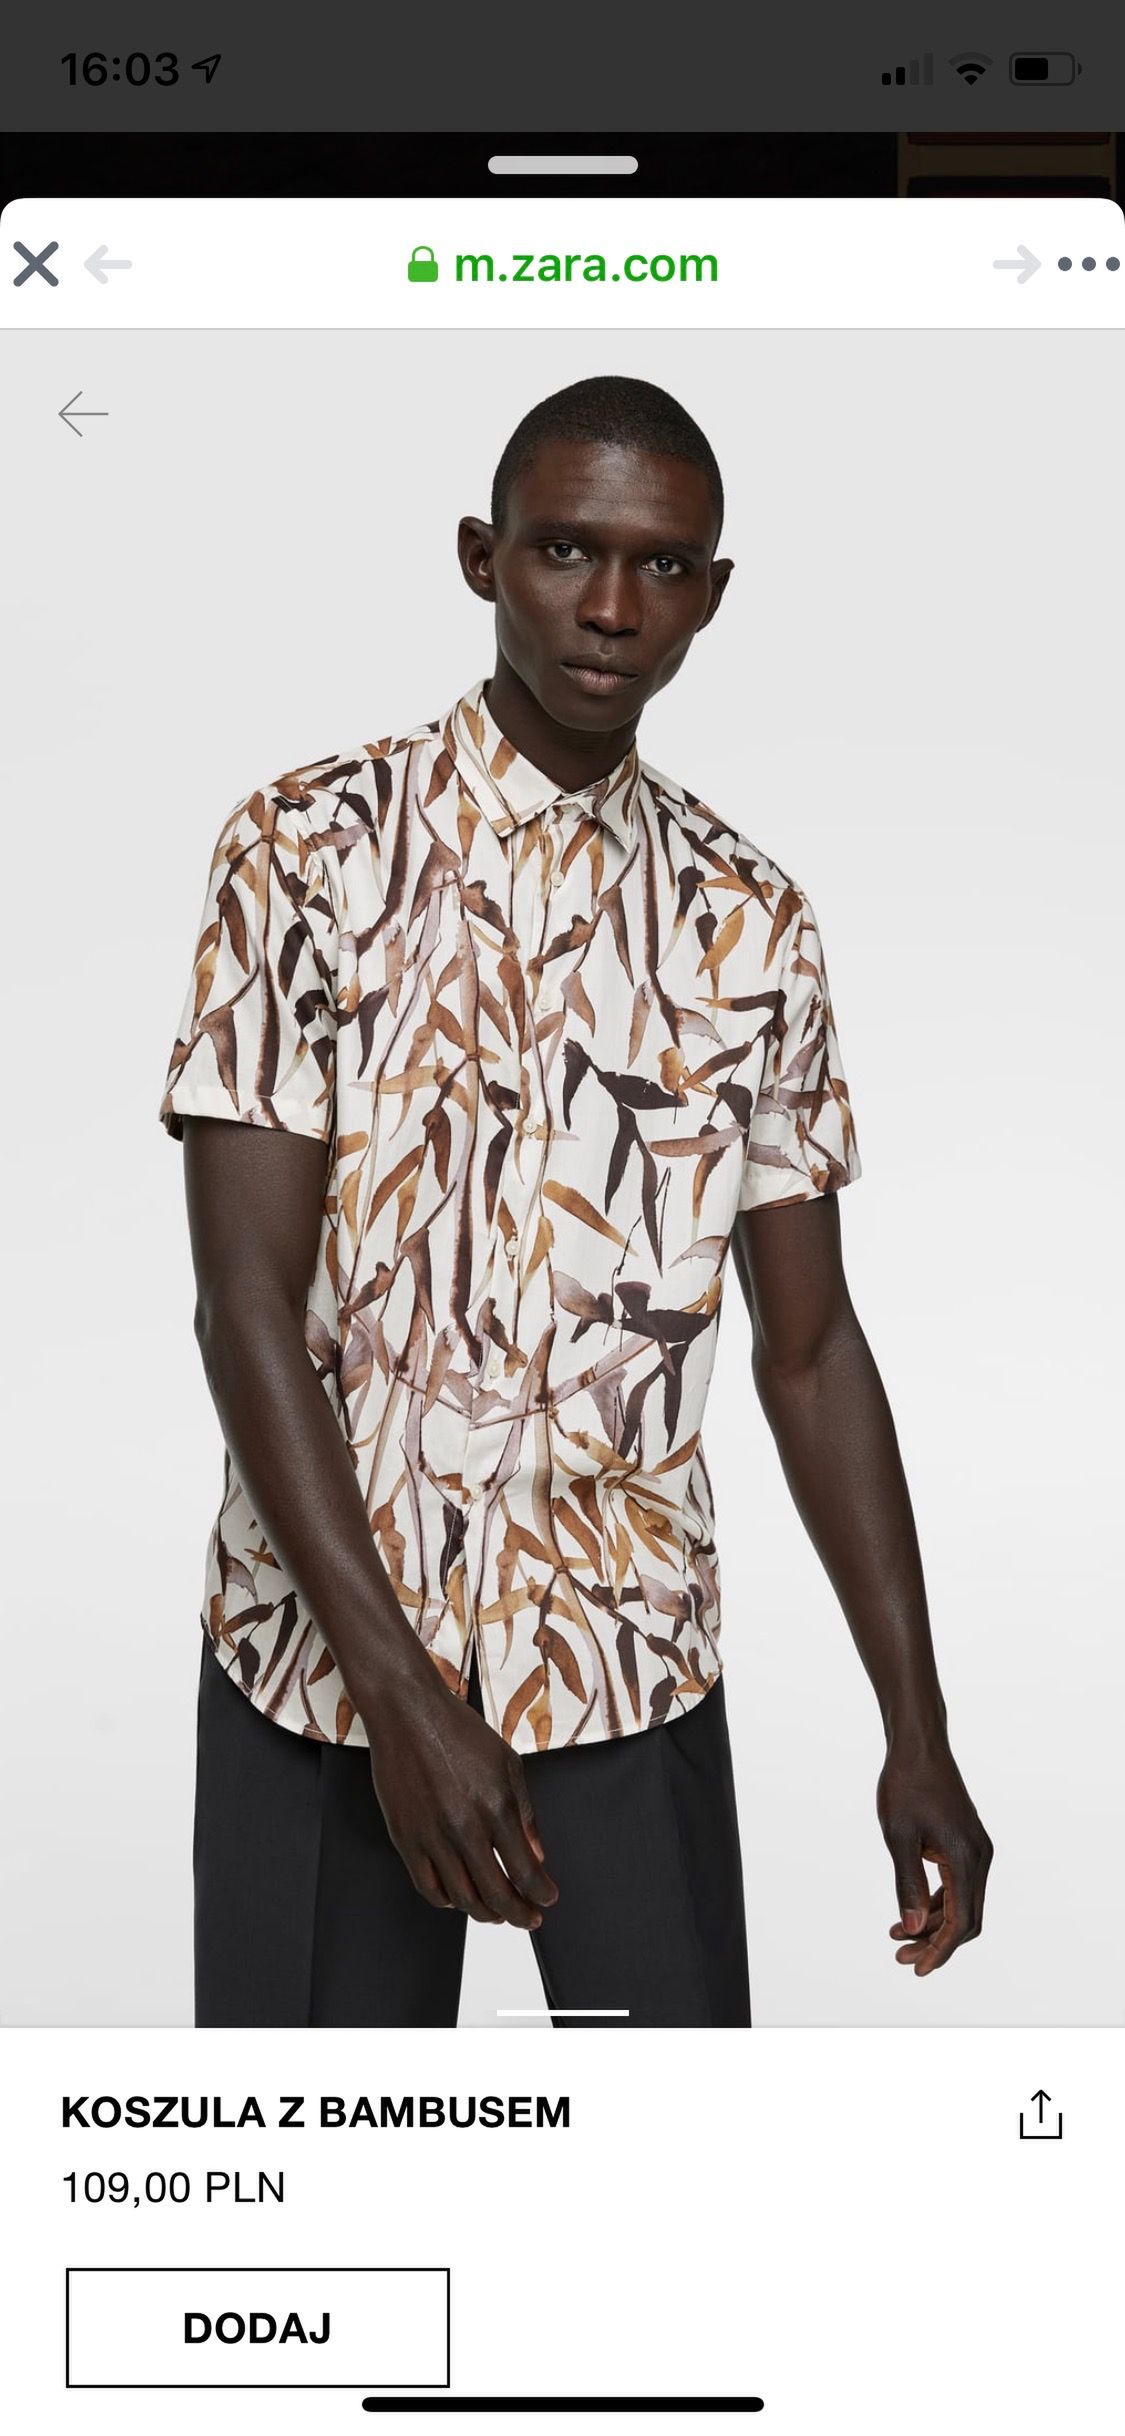 Koszula z bambusem – Zara